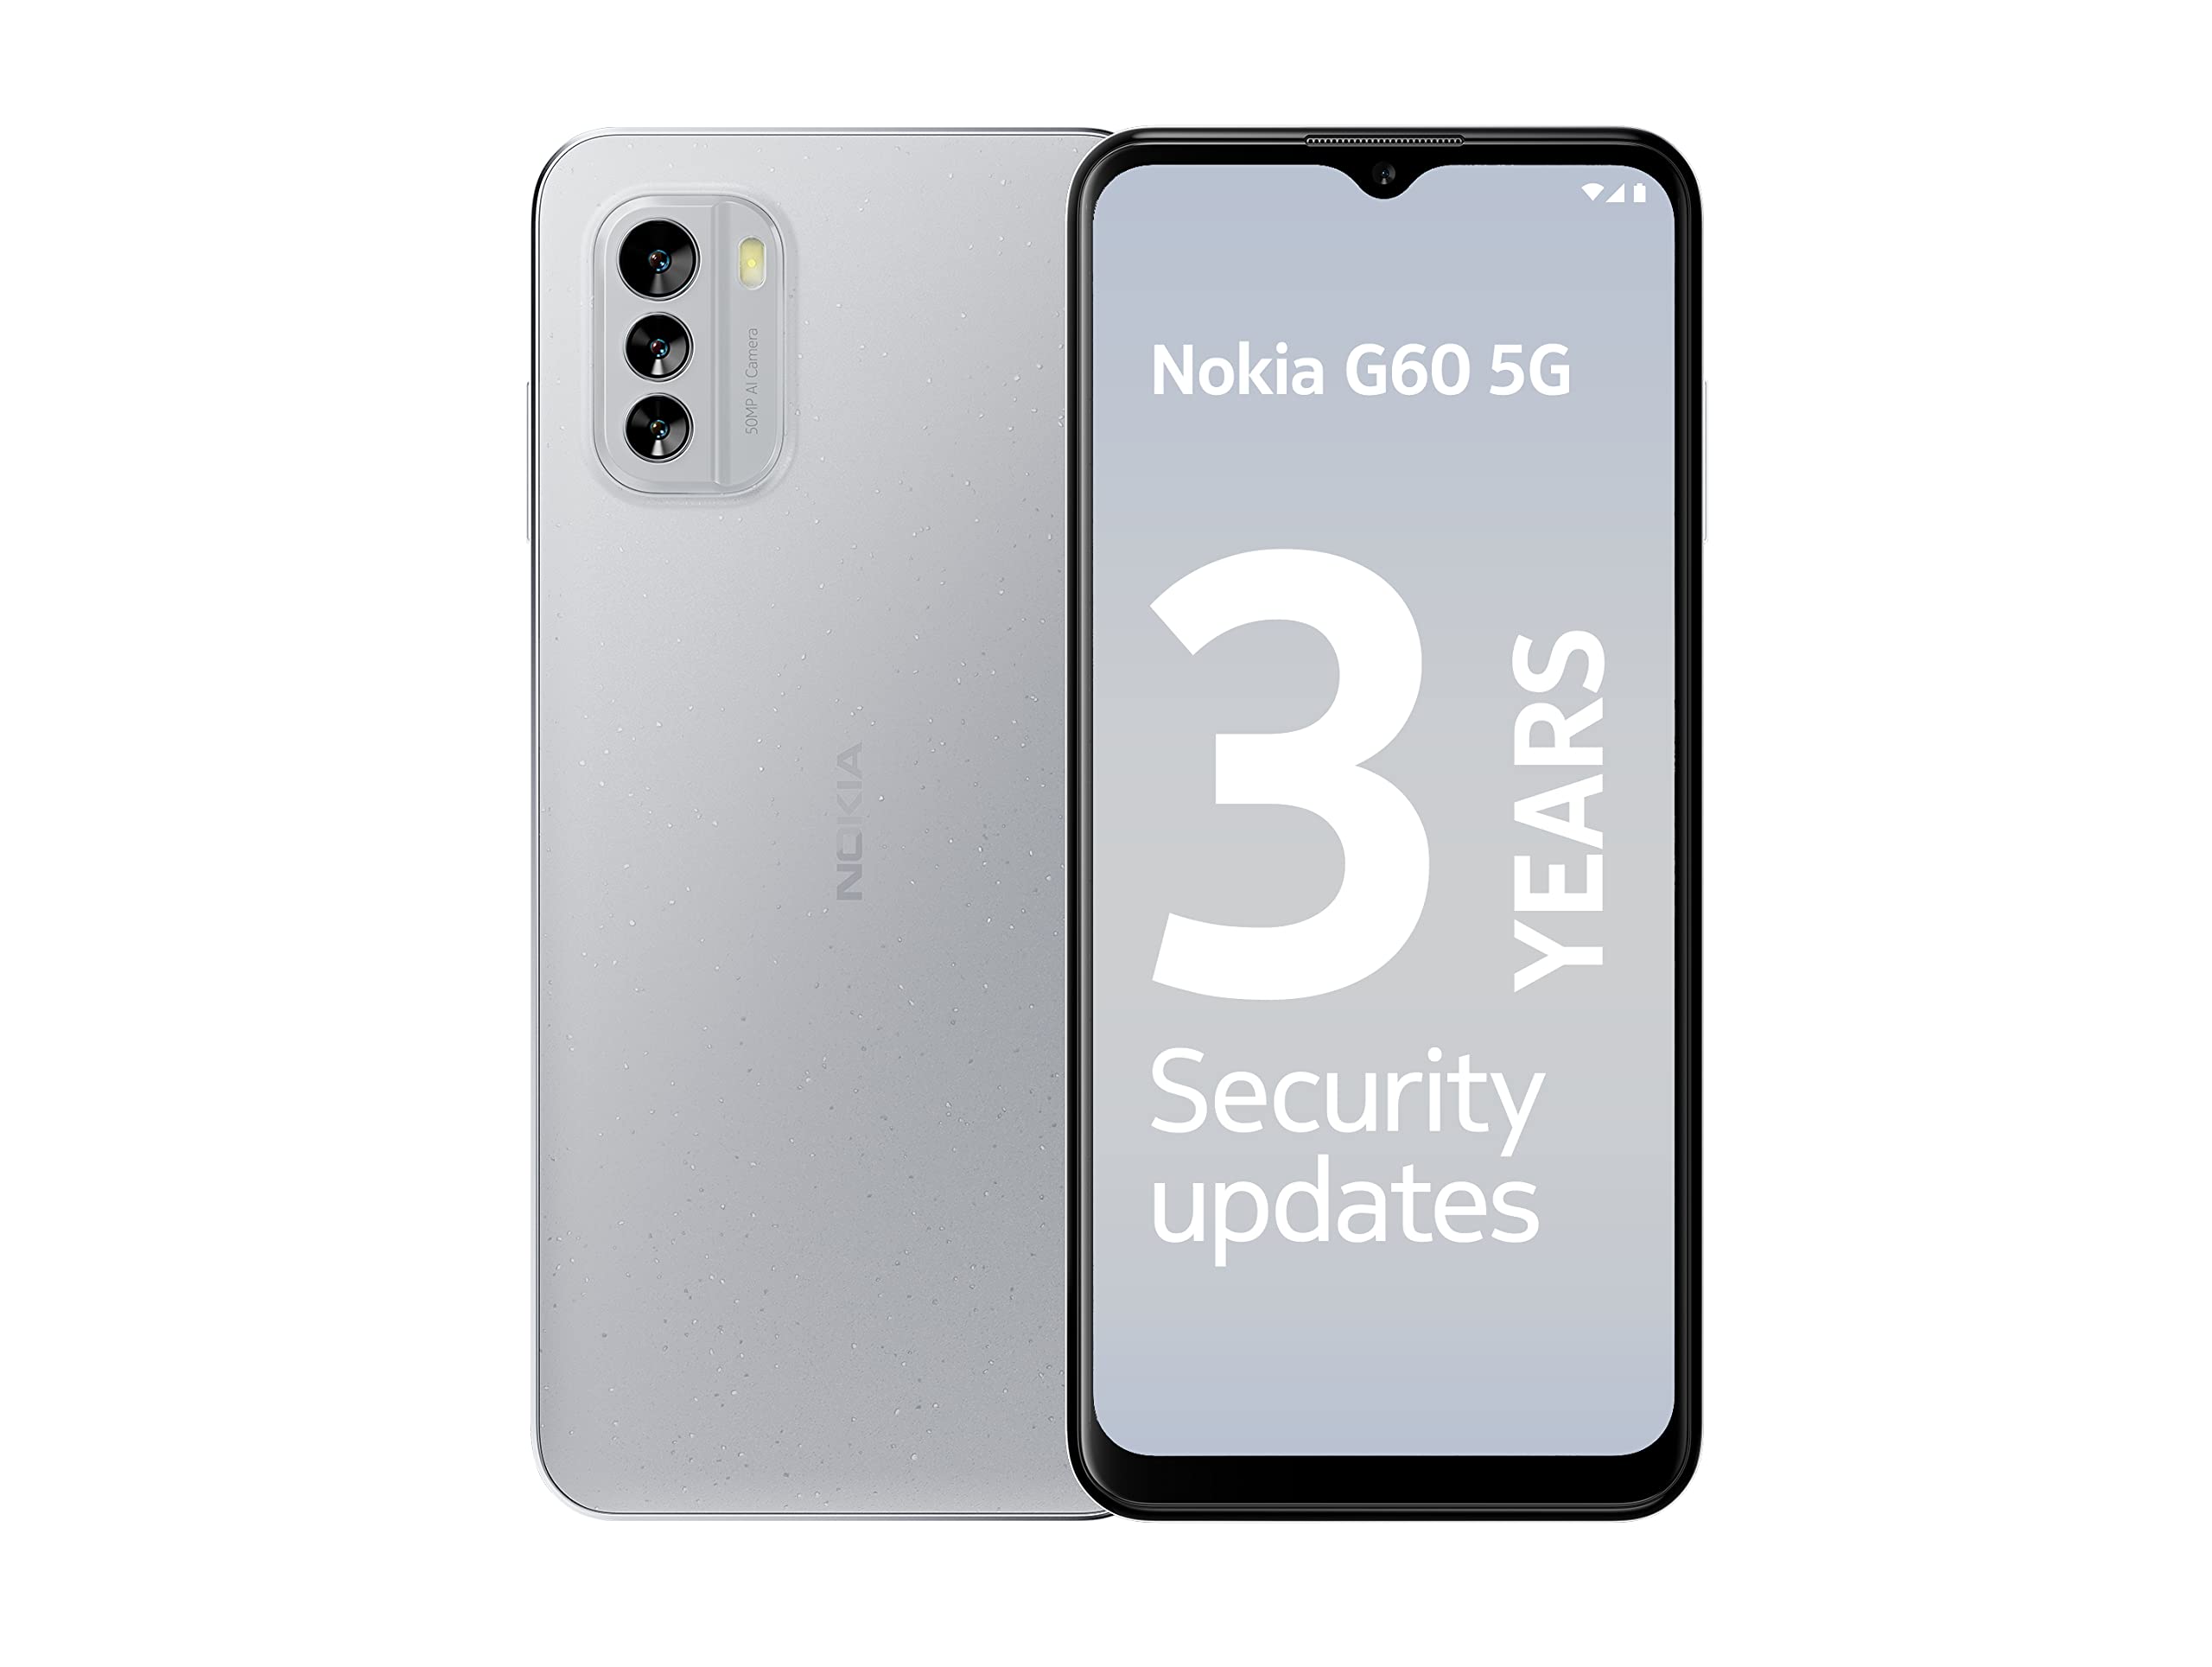 Nokia G60 5G Dual-SIM 64GB ROM + 4GB RAM (GSM only | No CDMA) Factory Unlocked 5G Smartphone (Ice) - International Version